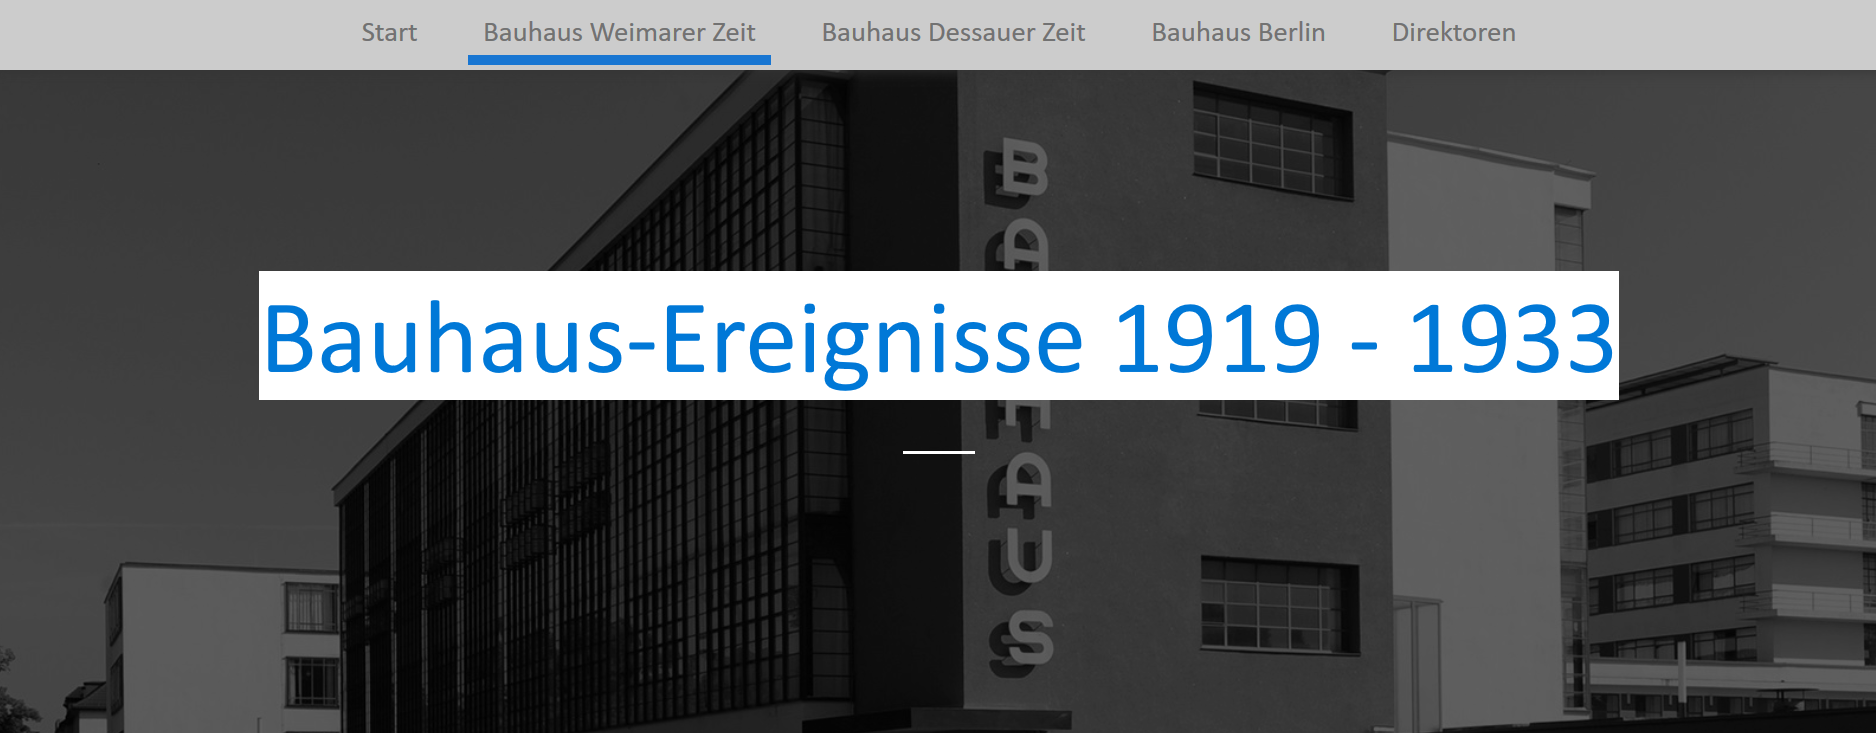 MM-SYS-2: Bauhaus-Ereignisse 1919-1933